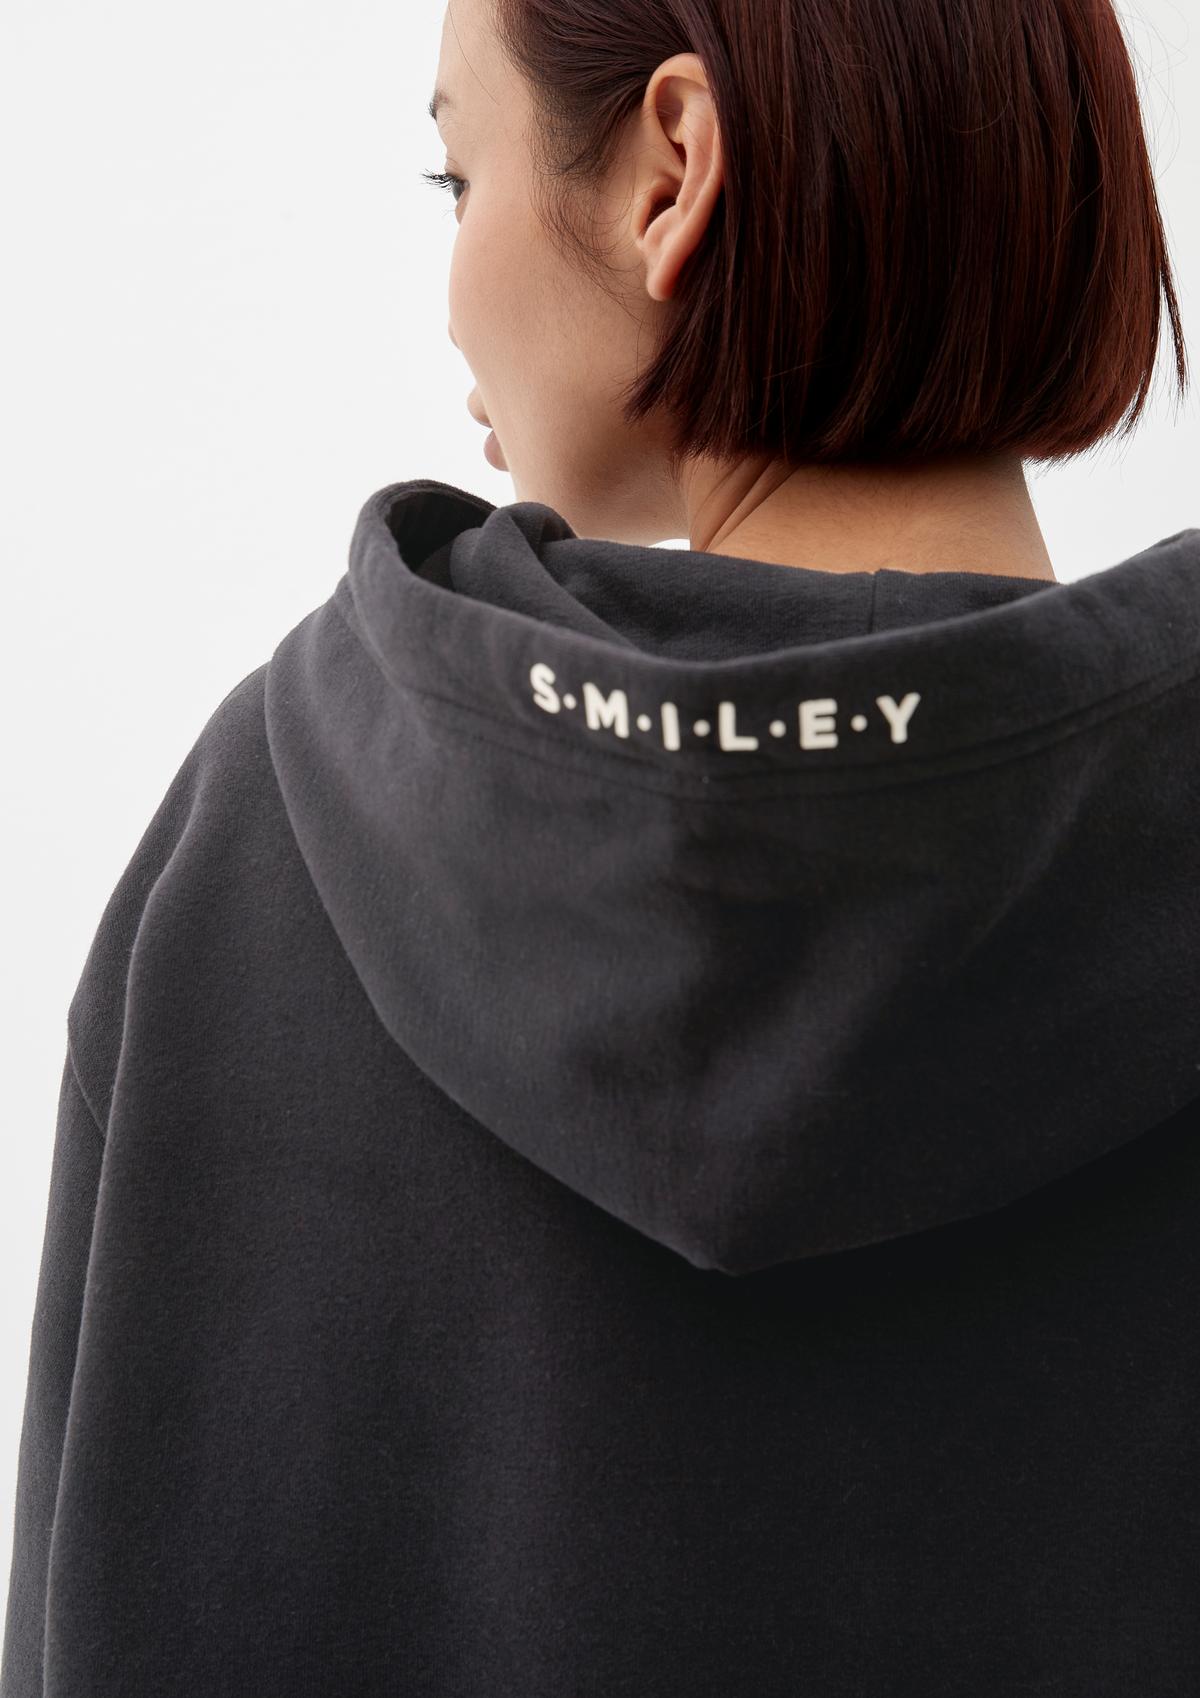 Smiley®-Print mit olivgrün Langer - Sweater